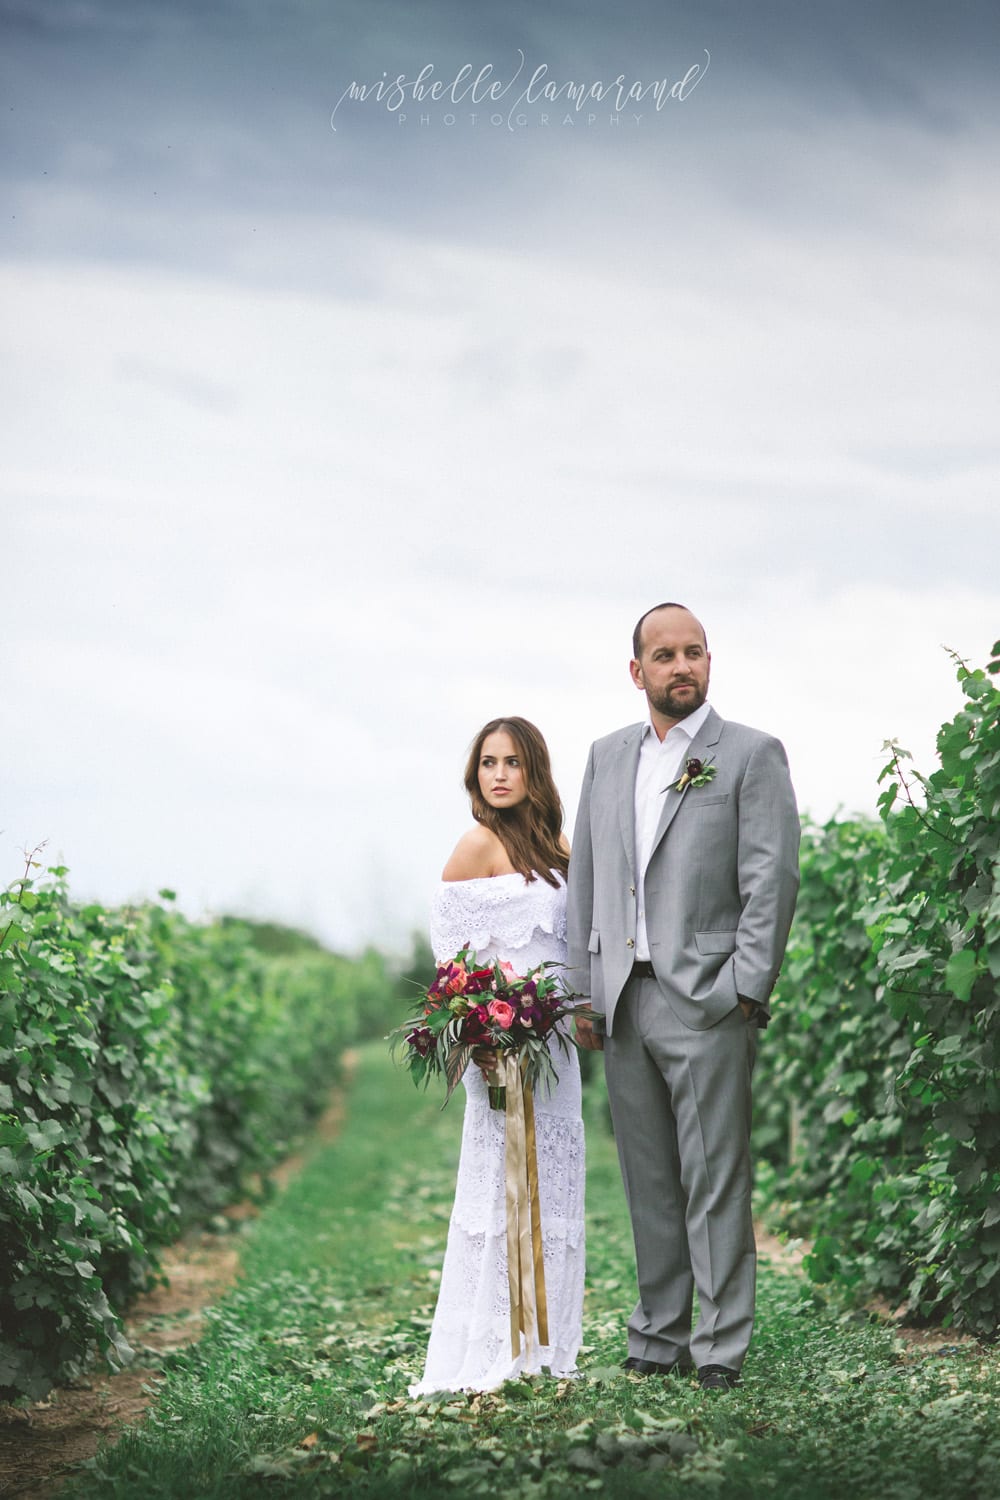 Mishelle Lamarand PhotographyCiccone Voneyard & WineryNorthern Michigan Wedding PhotographerSuttons Bay Wedding Photographer (7)